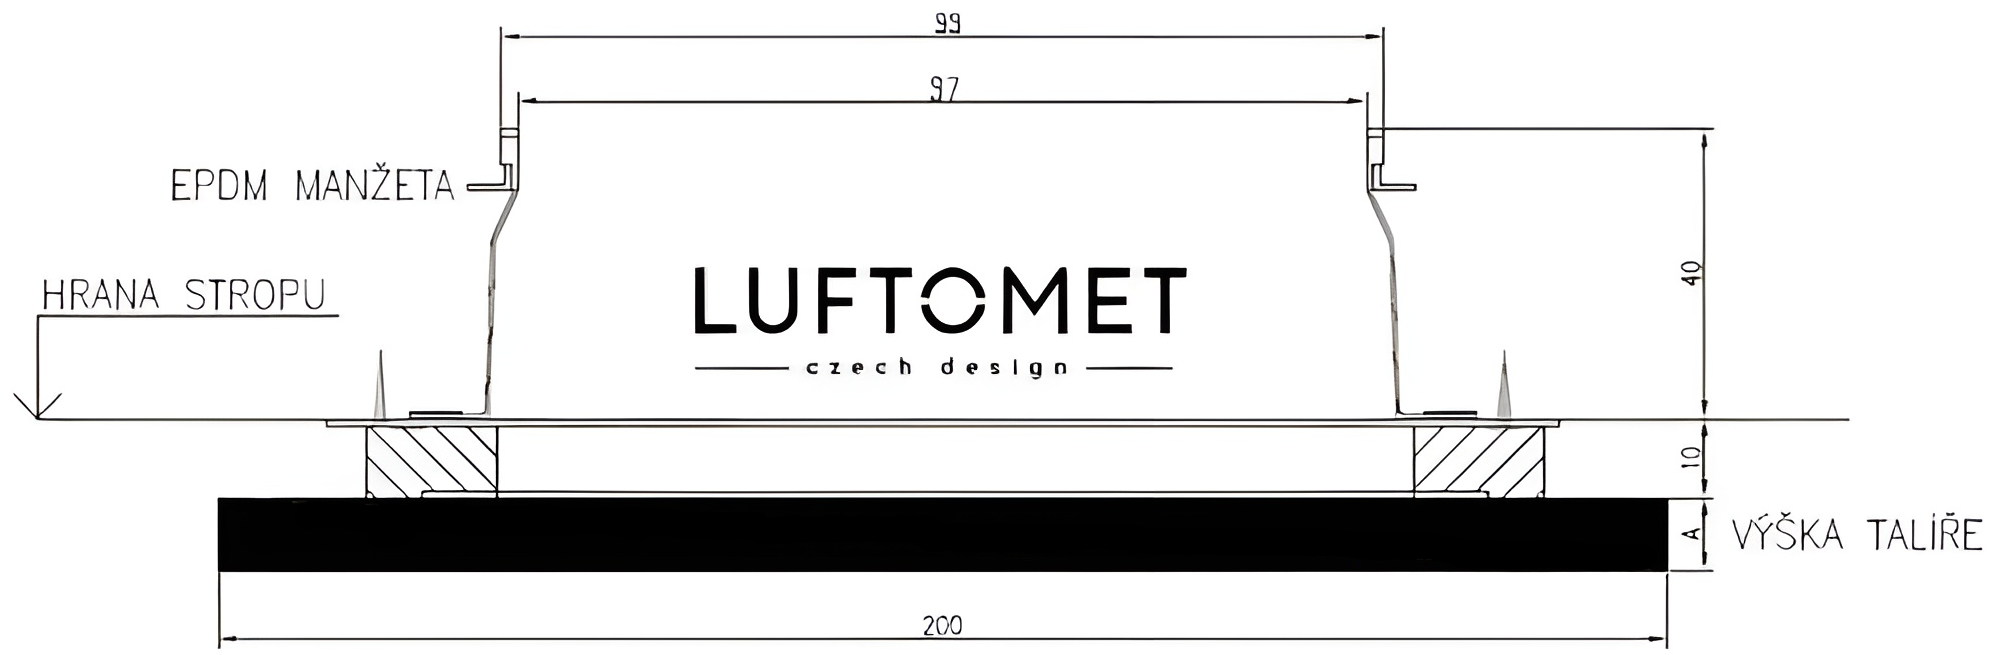 Luftomet Sky LS-W-Q-GB-100W Габаритные размеры